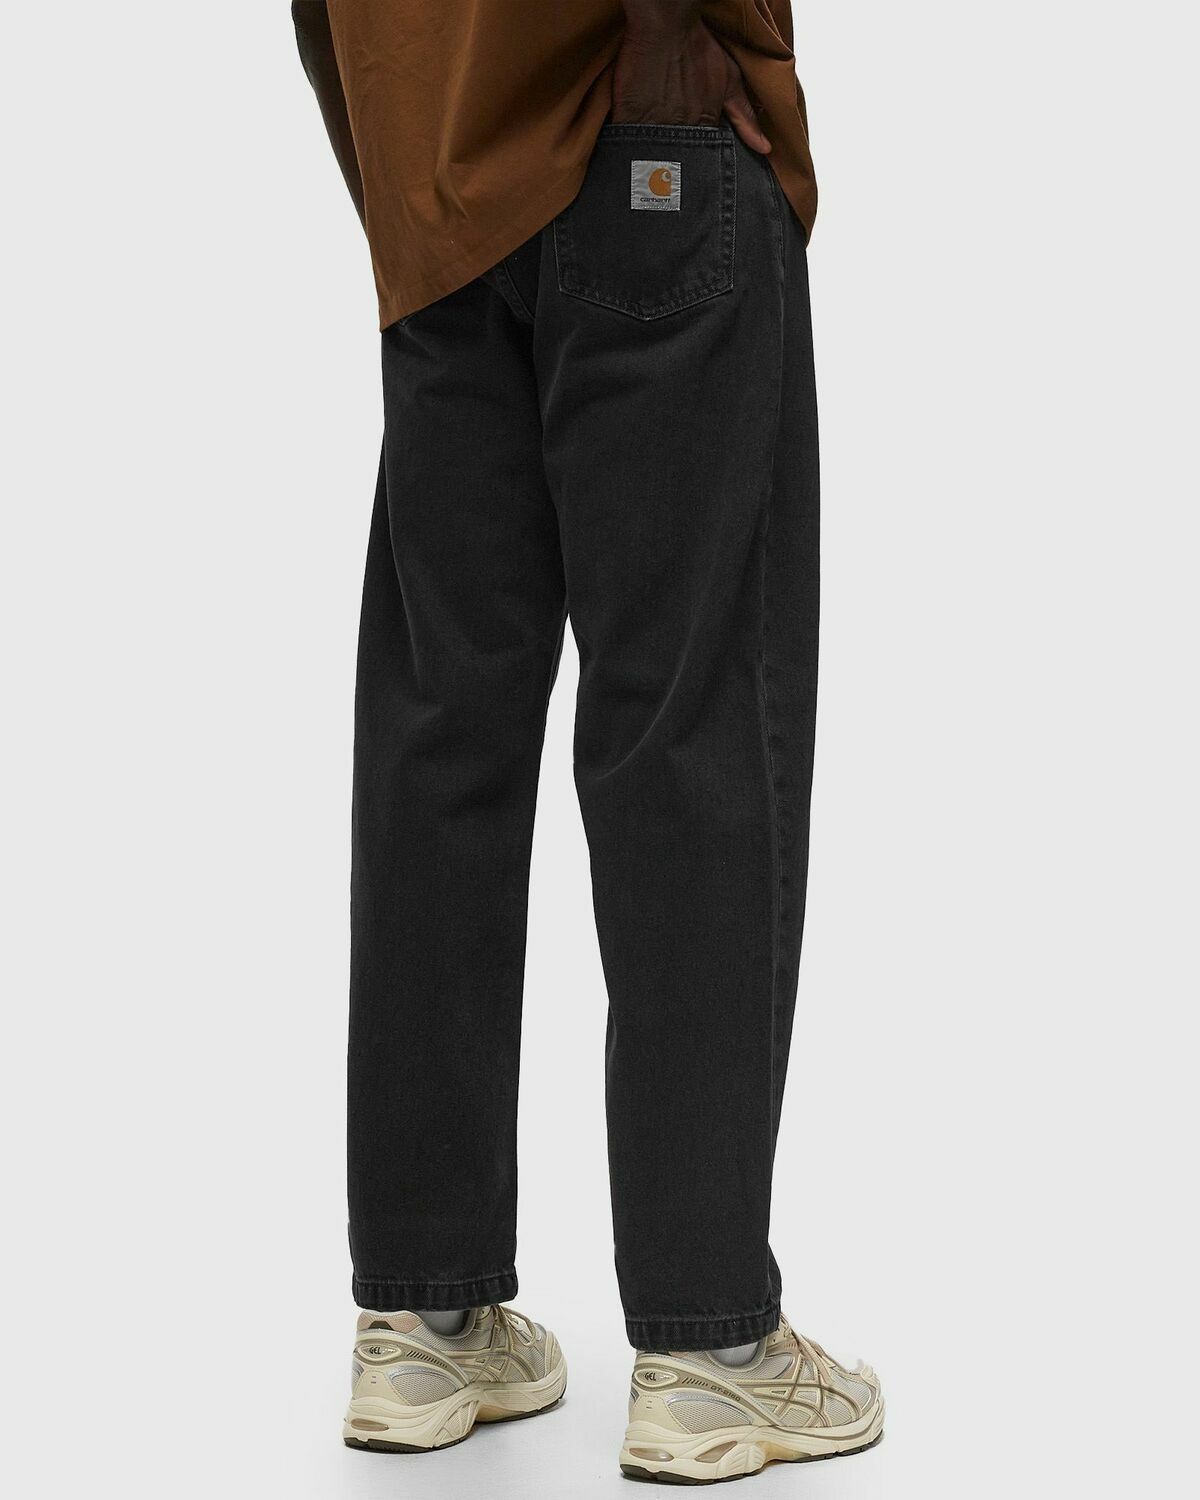 Carhartt Wip Landon Pant Black - Mens - Jeans Carhartt WIP